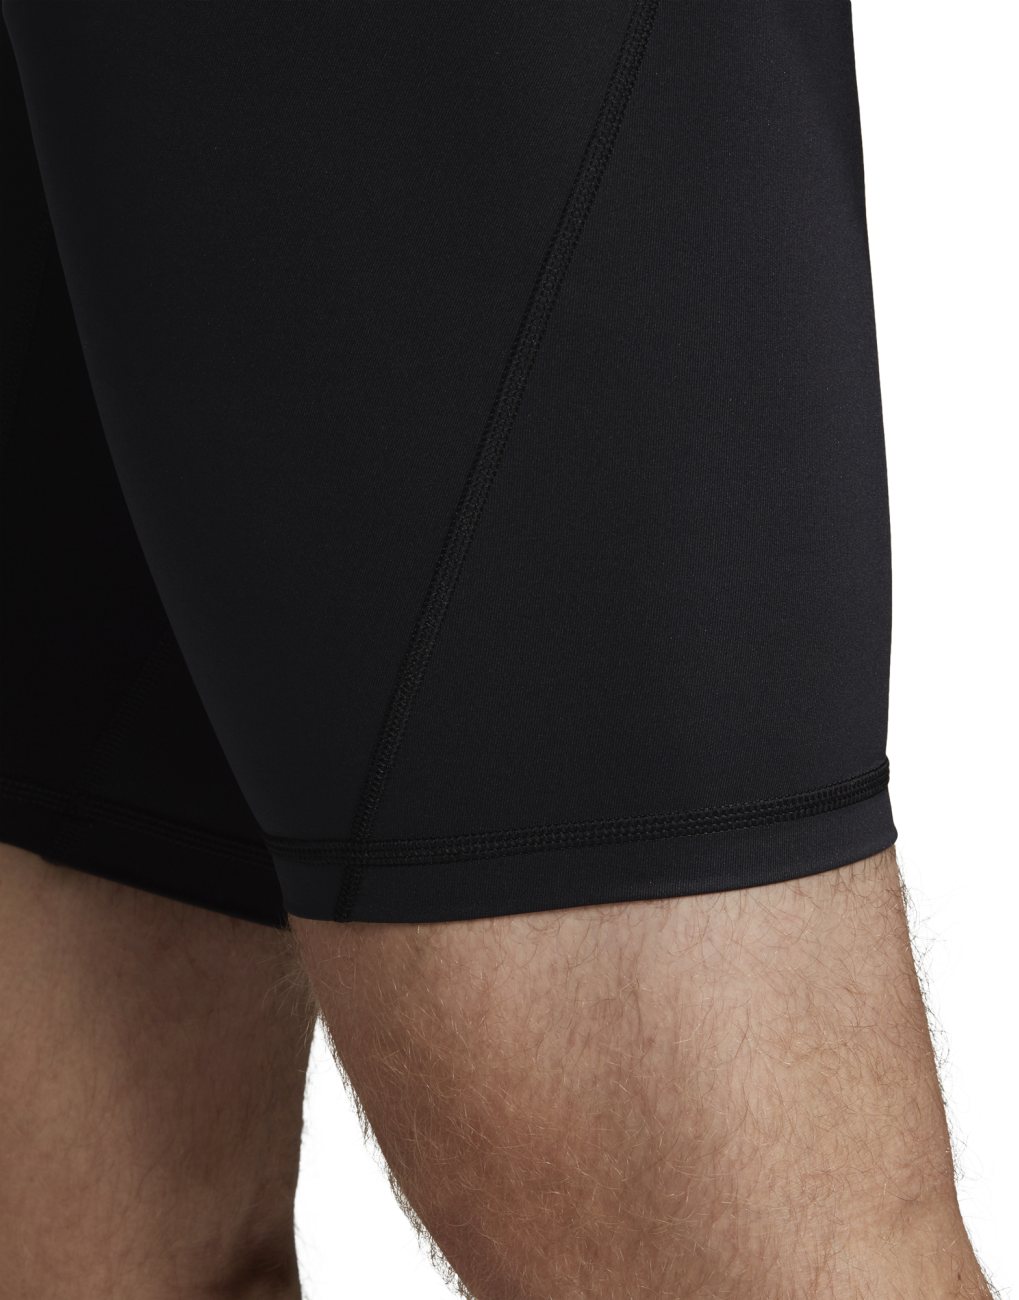 Men's shorts